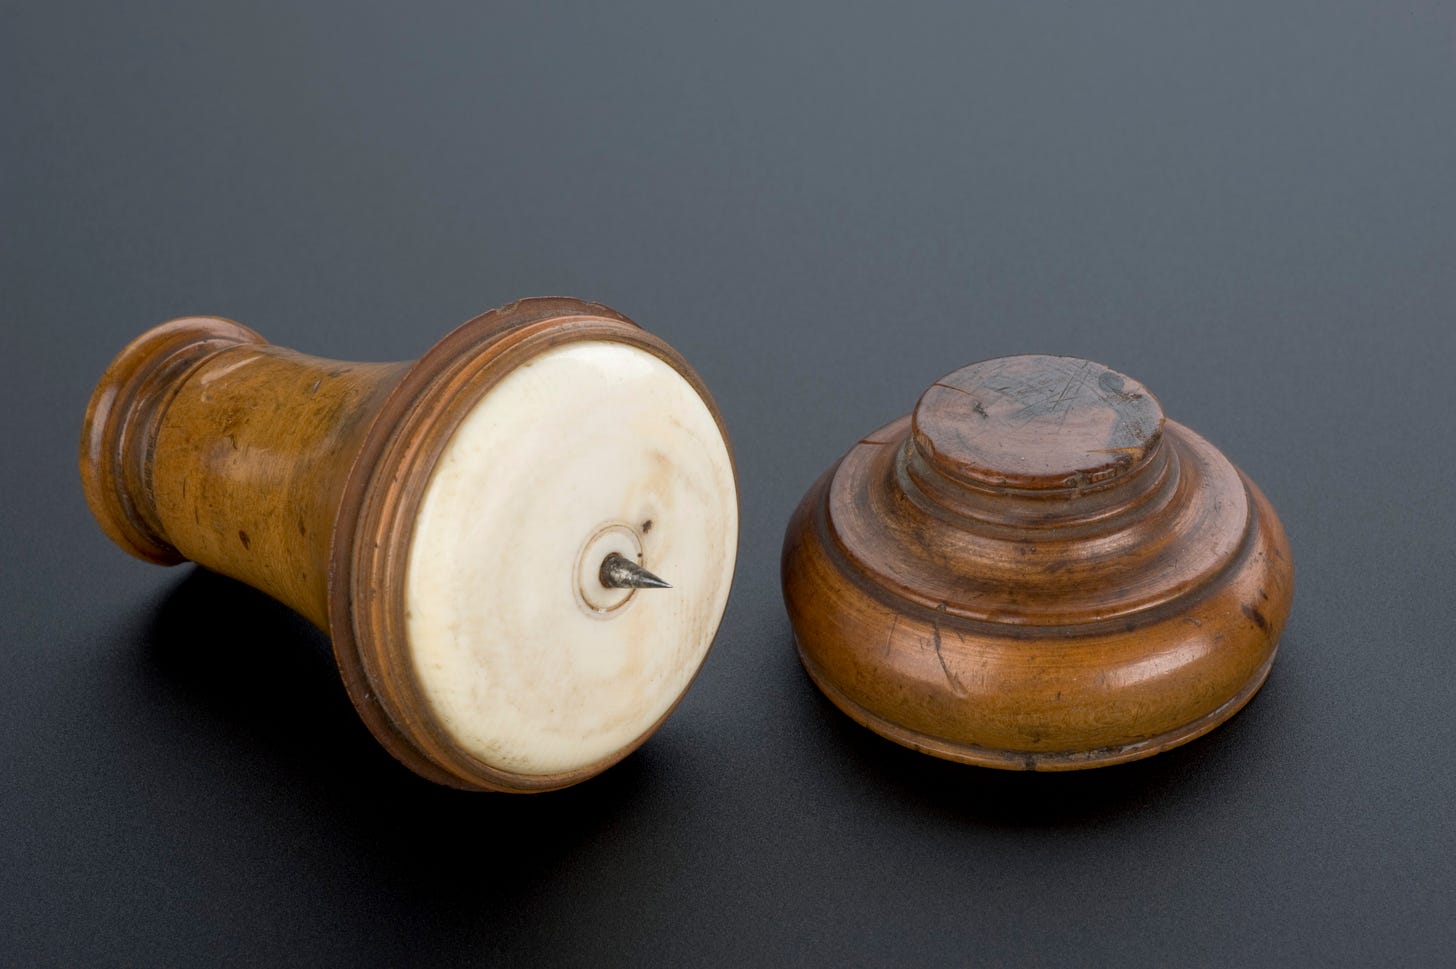 File:Ivory and box wood vaccinator, Europe, 1701-1800 Wellcome L0058083.jpg  - Wikimedia Commons